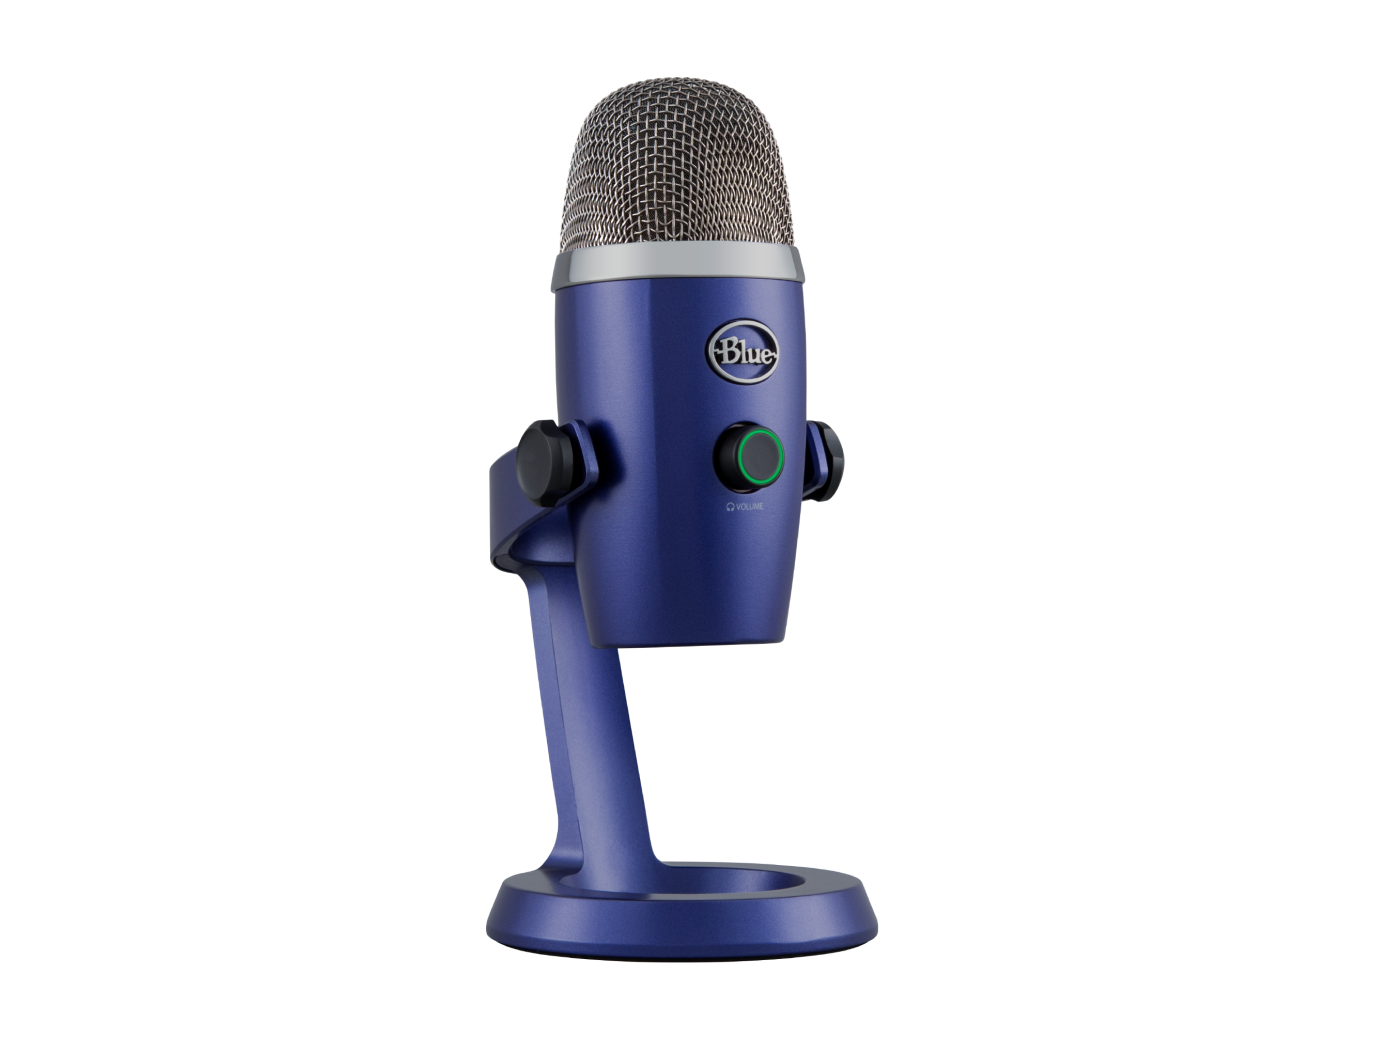 Image of Yeti Nano Premium Dual-Pattern USB Microphone with Blue VO!CE - Vivid Blue